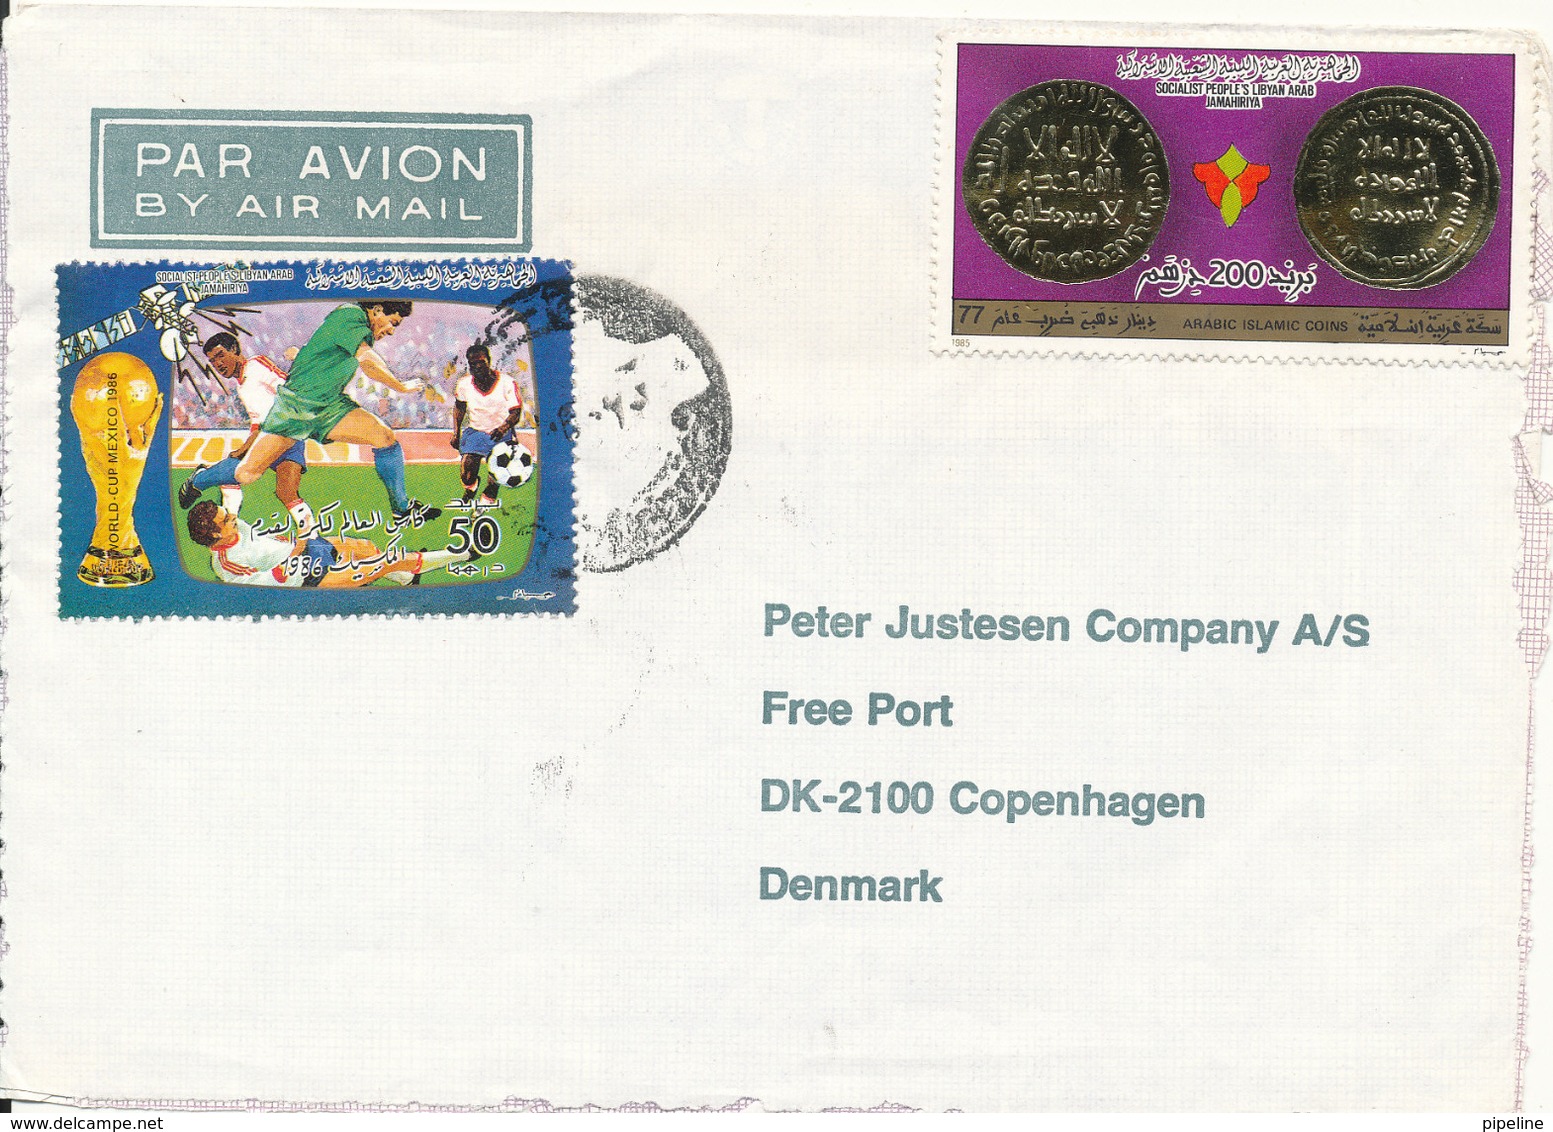 Libya Cover Sent Air Mail To Denmark 1986 - Libya